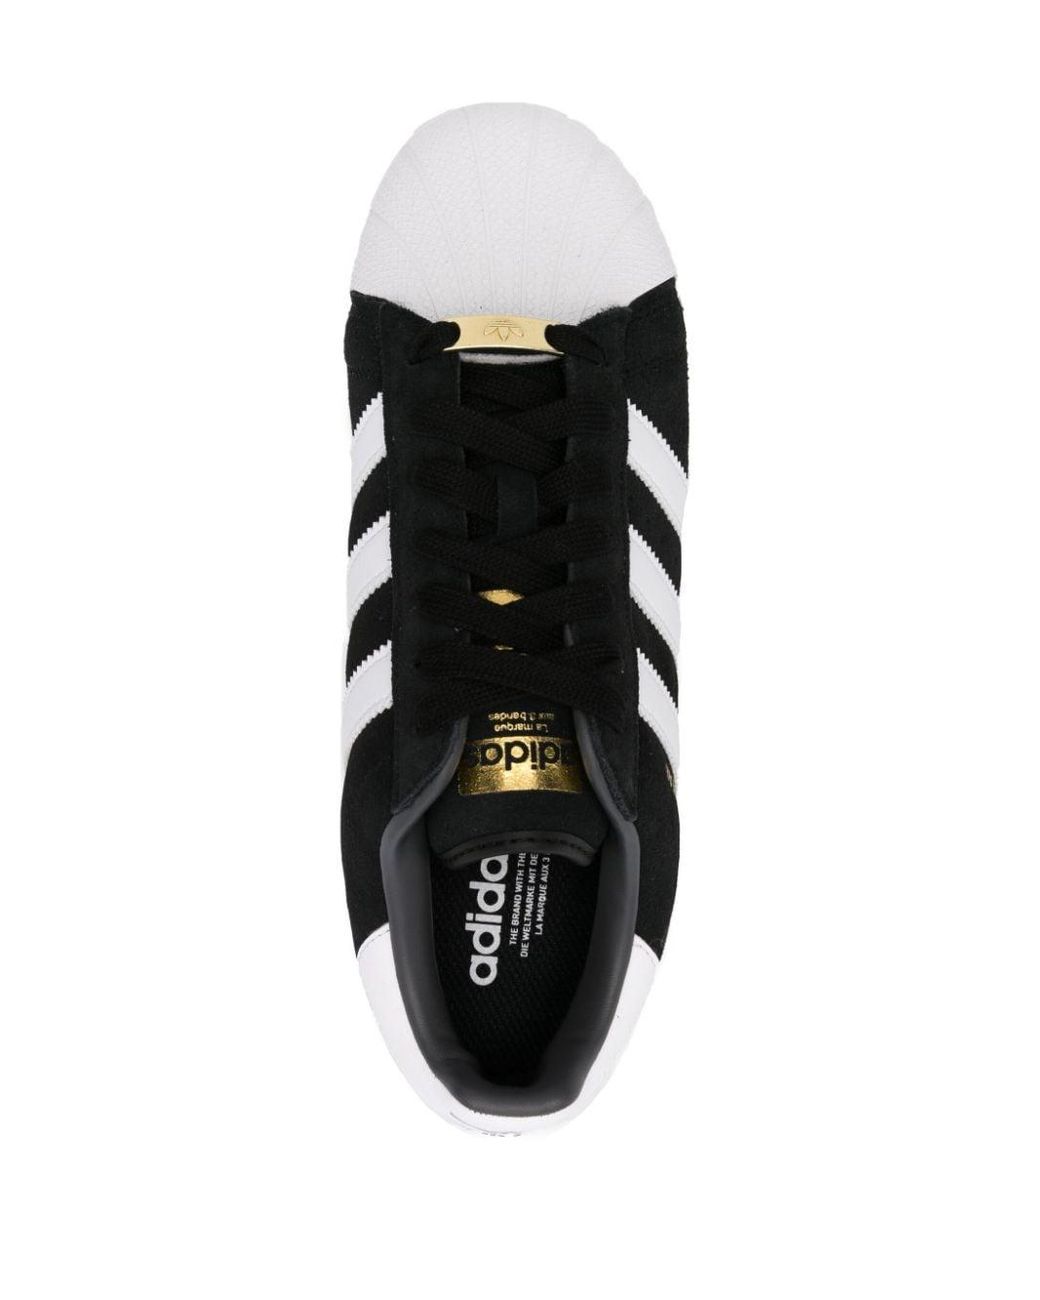 Adidas Originals Unisex Superstar XLG Leather Sneakers